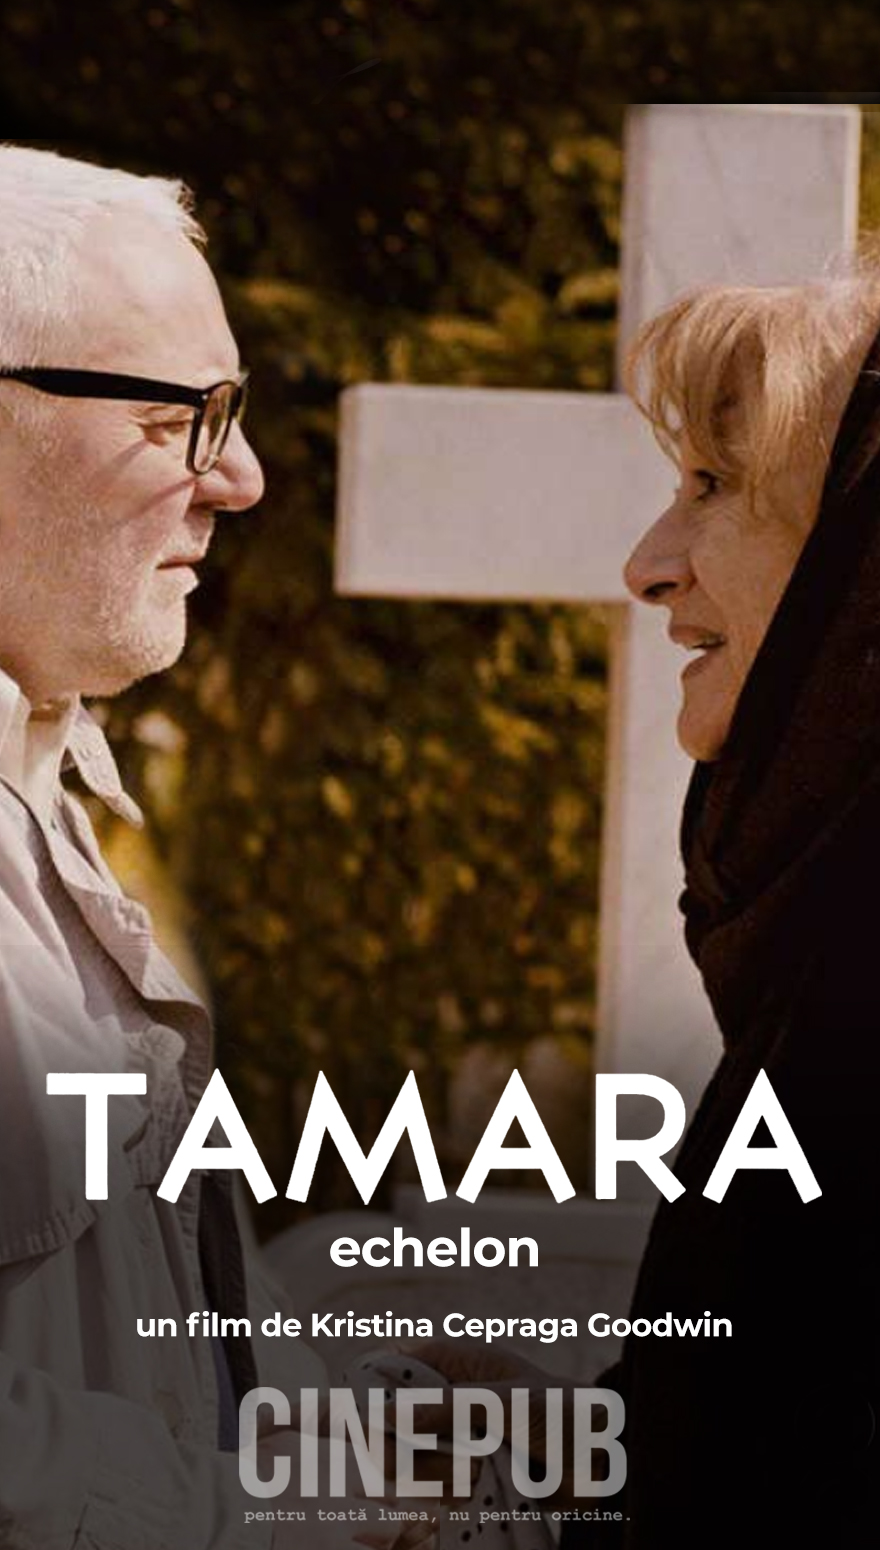 Tamara Echelon - short film by Kristina Cepraga, online on CINEPUB